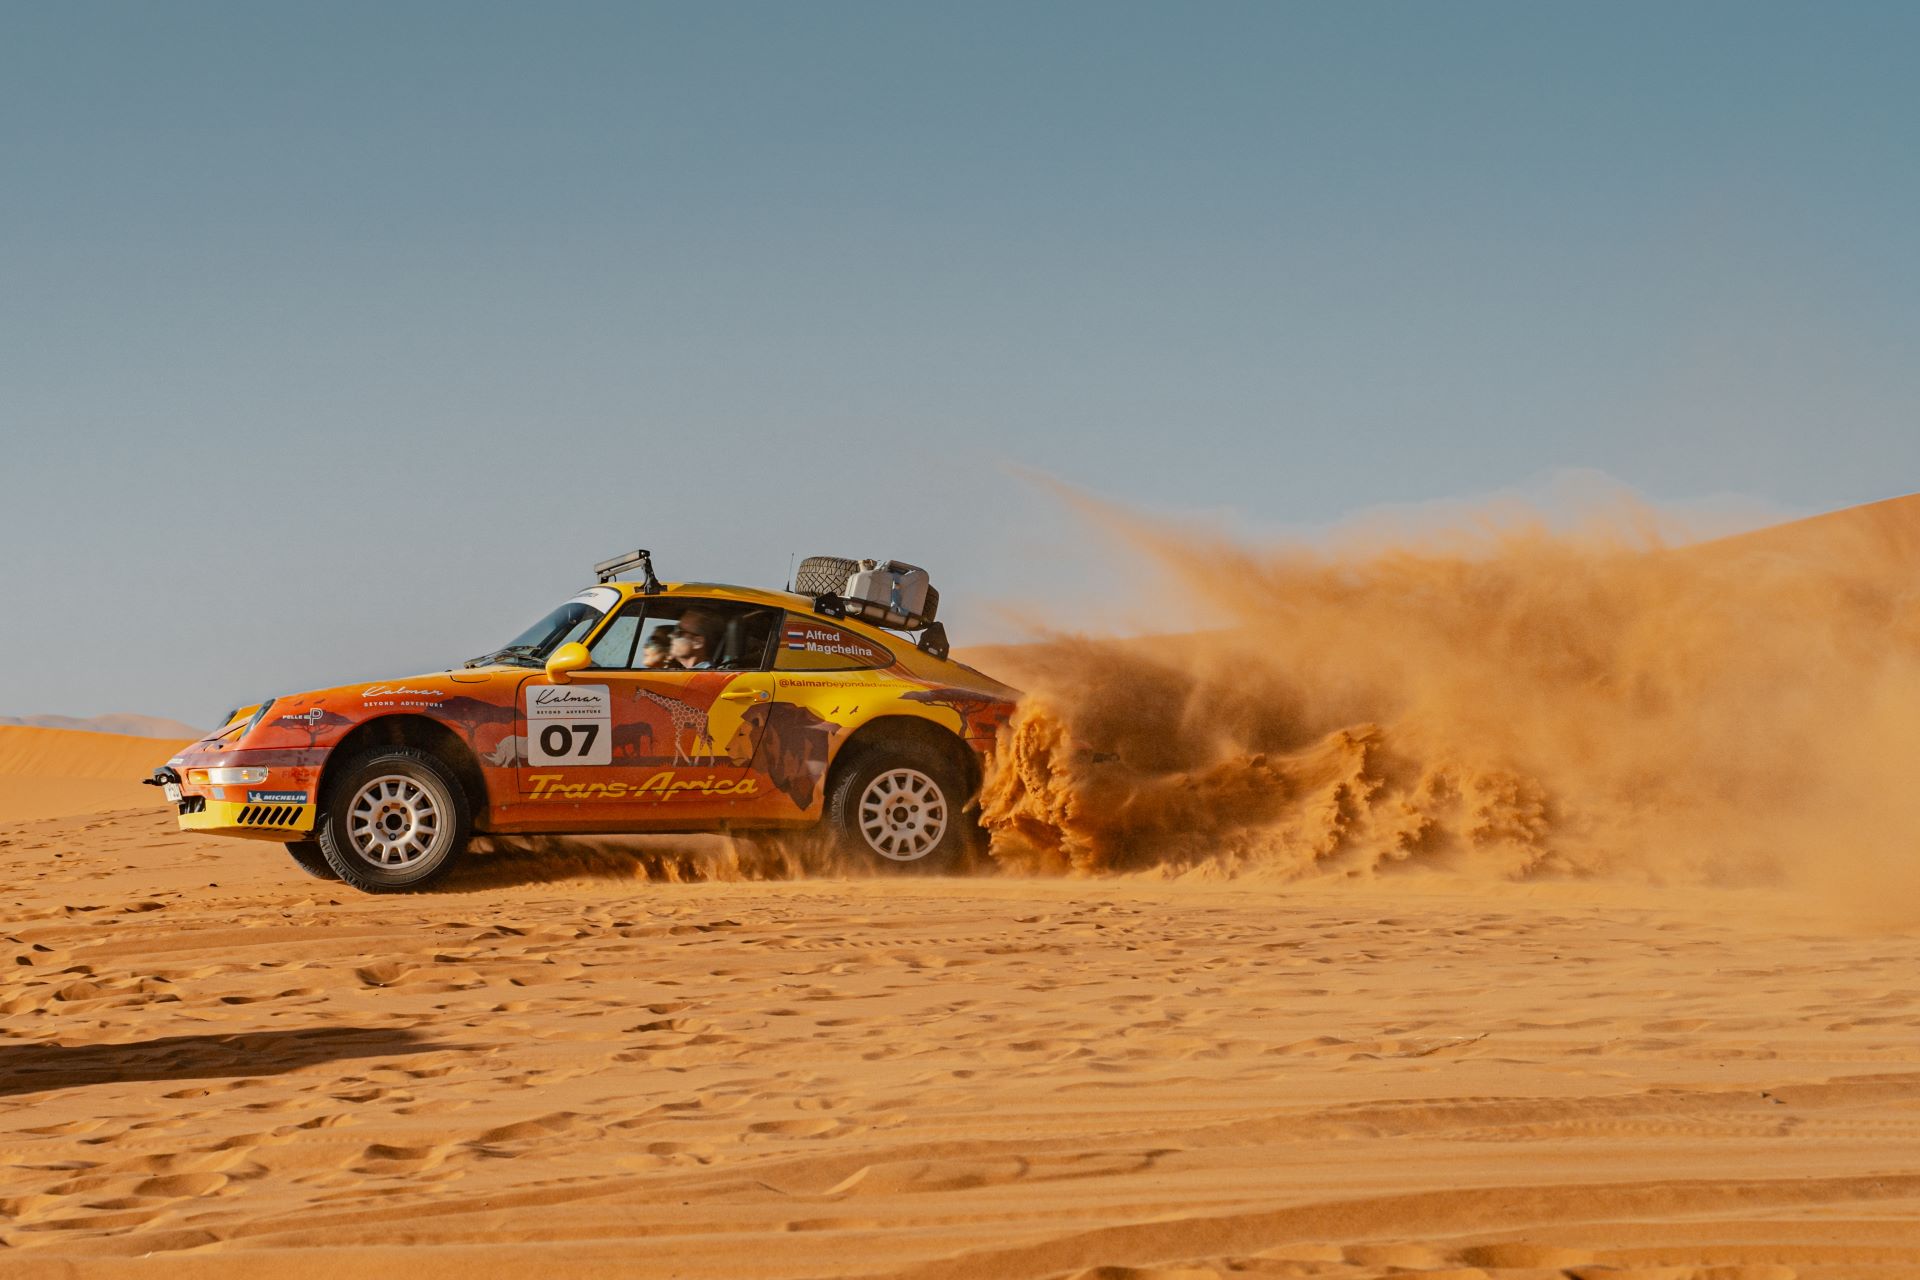 Embark on the Ultimate Safari: Drive a Porsche Across Africa with KALMAR Beyond Adventure